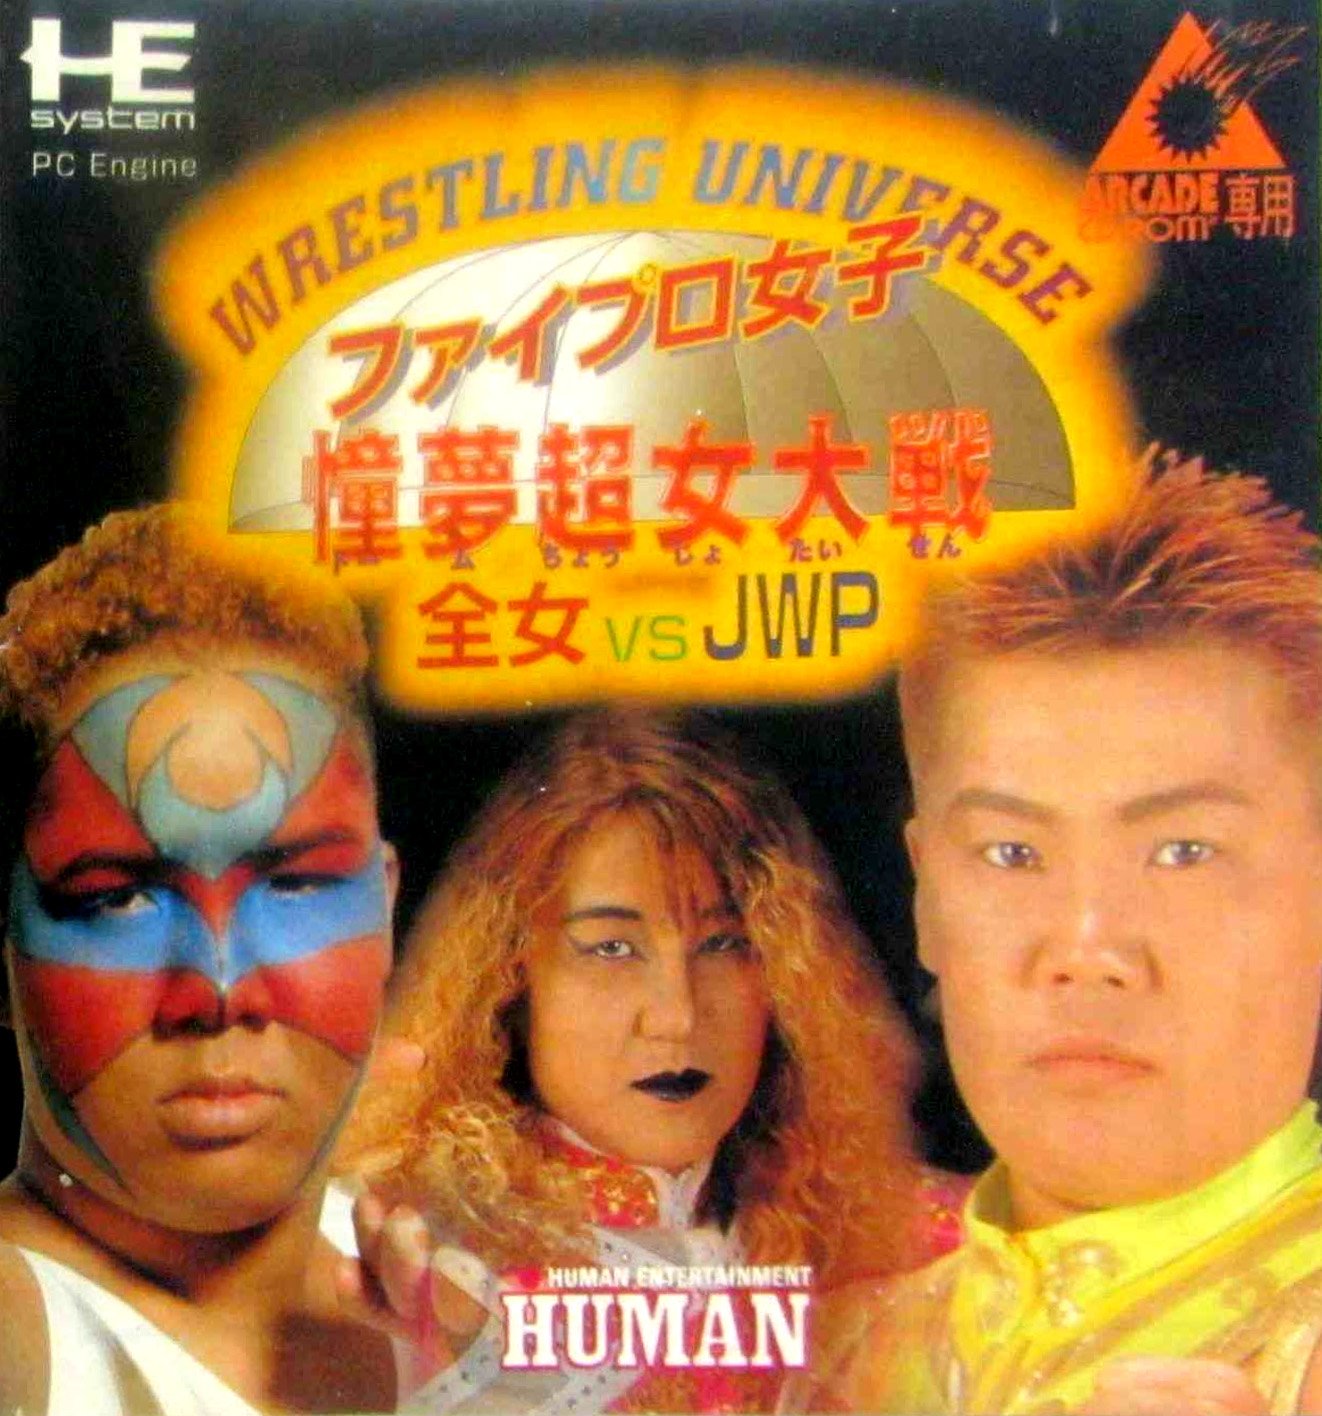 Image of Wrestling Universe: Fire Pro Women: Dome Super Female Big Battle: All Japan Women VS J.W.P.